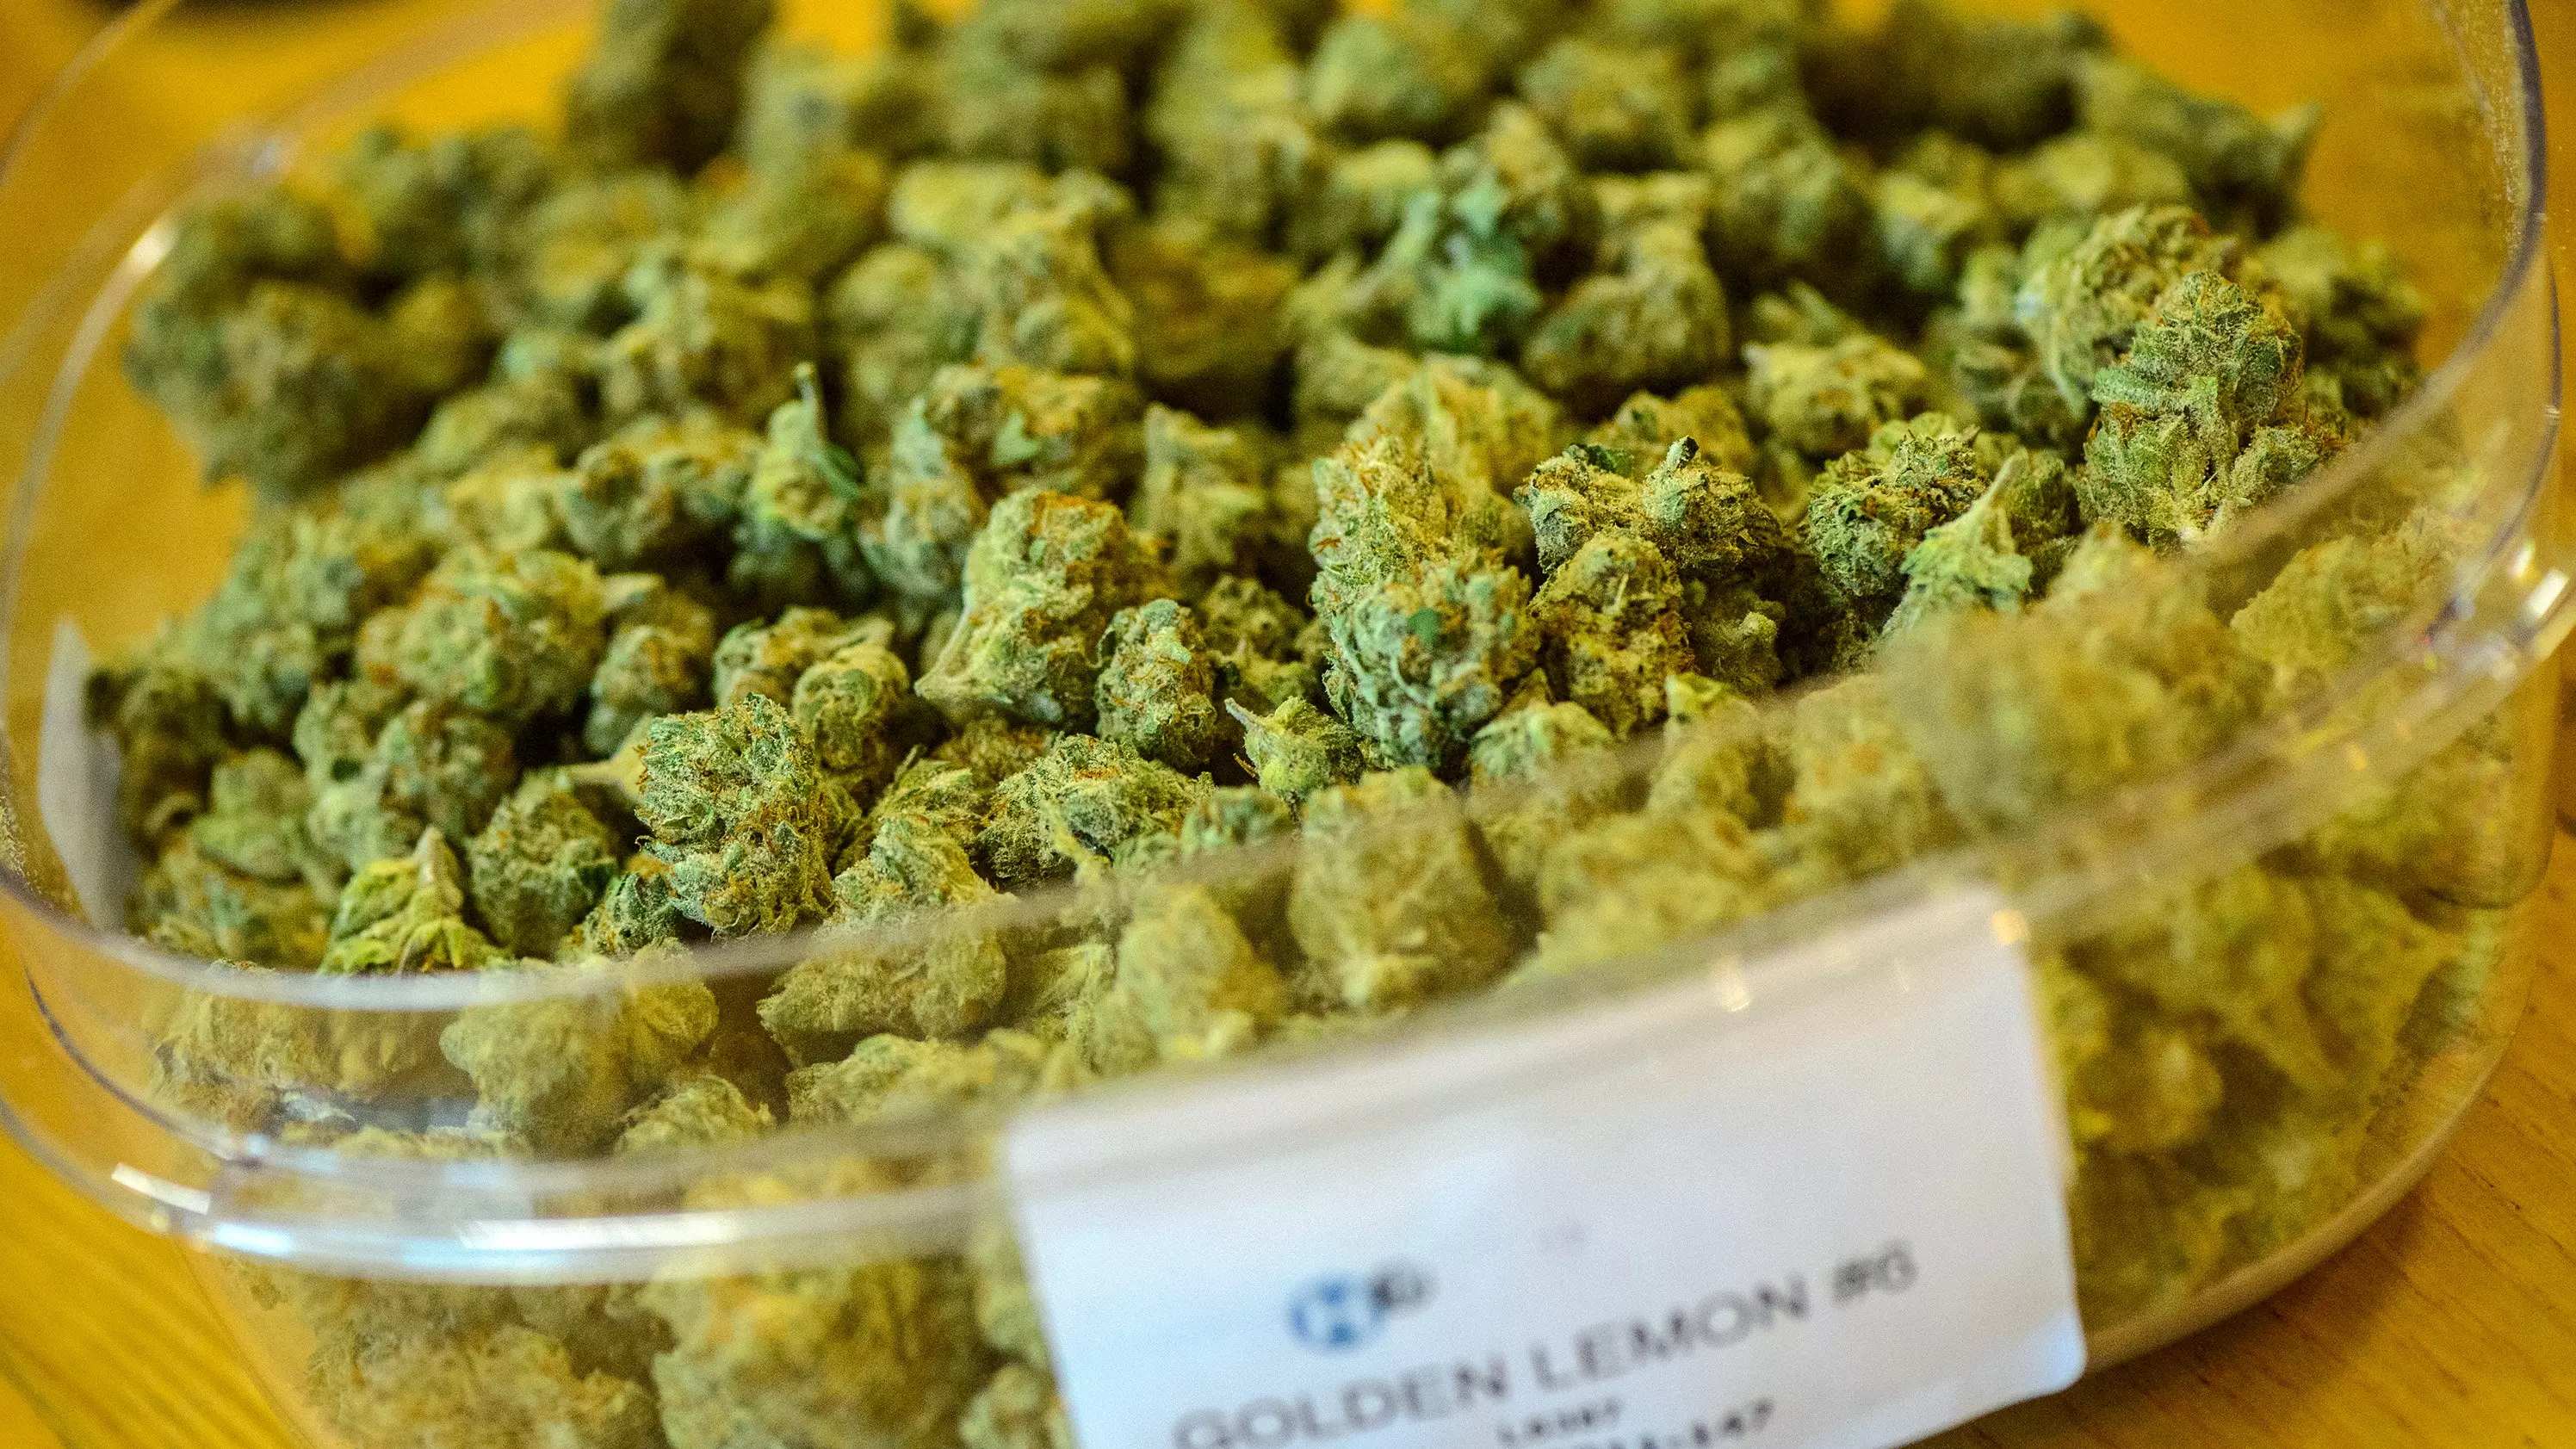 Legalising Cannabis In Australia Could Create $1 Billion In Tax Revenue, Says Expert